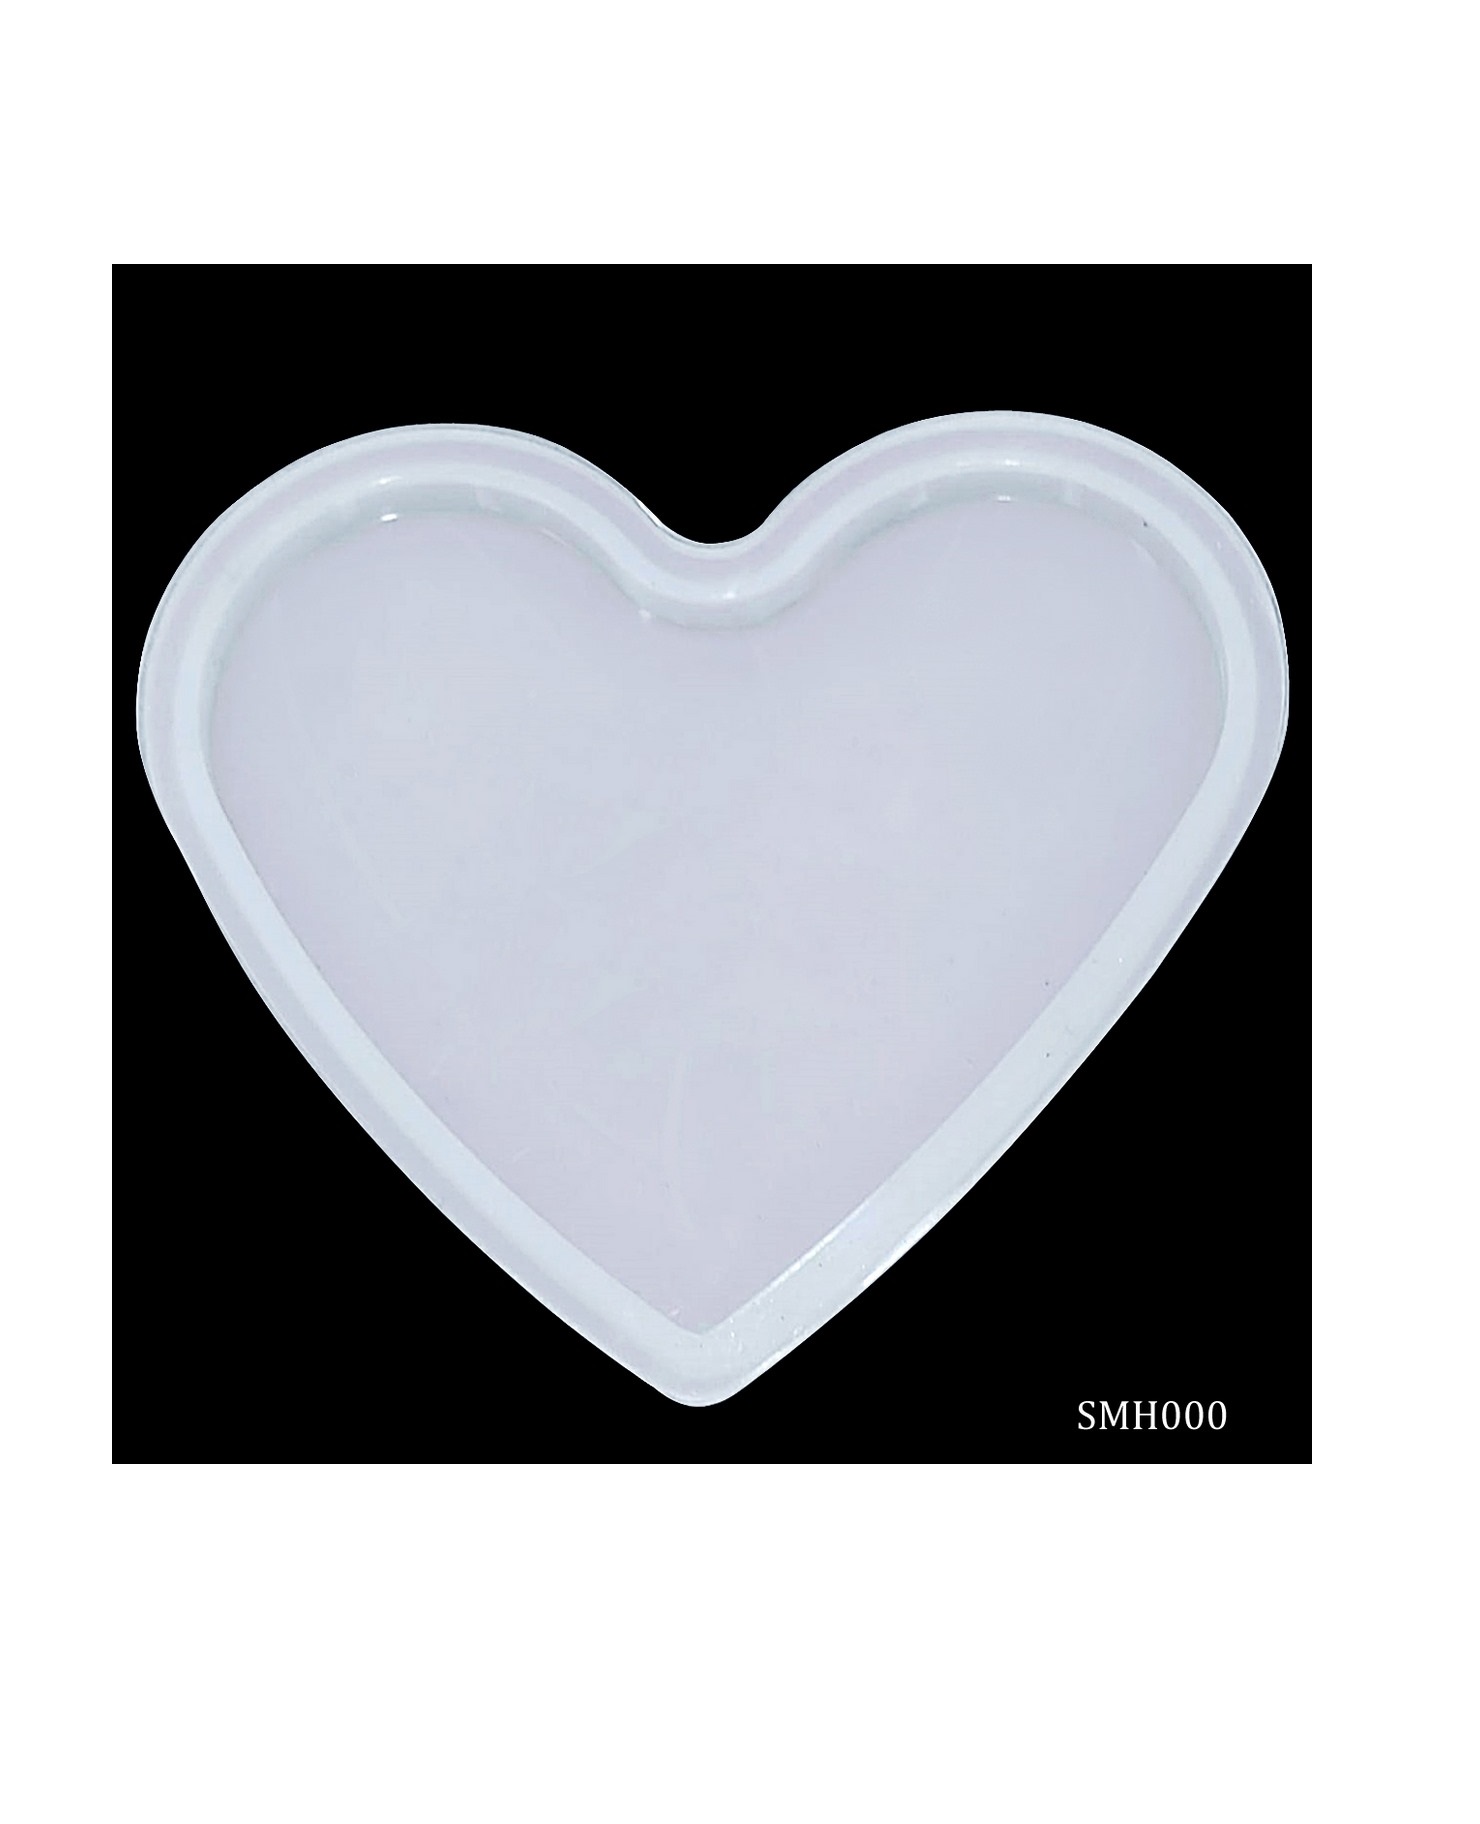 Silicone Mould Heart 4.1X3.5 Inc SMH000